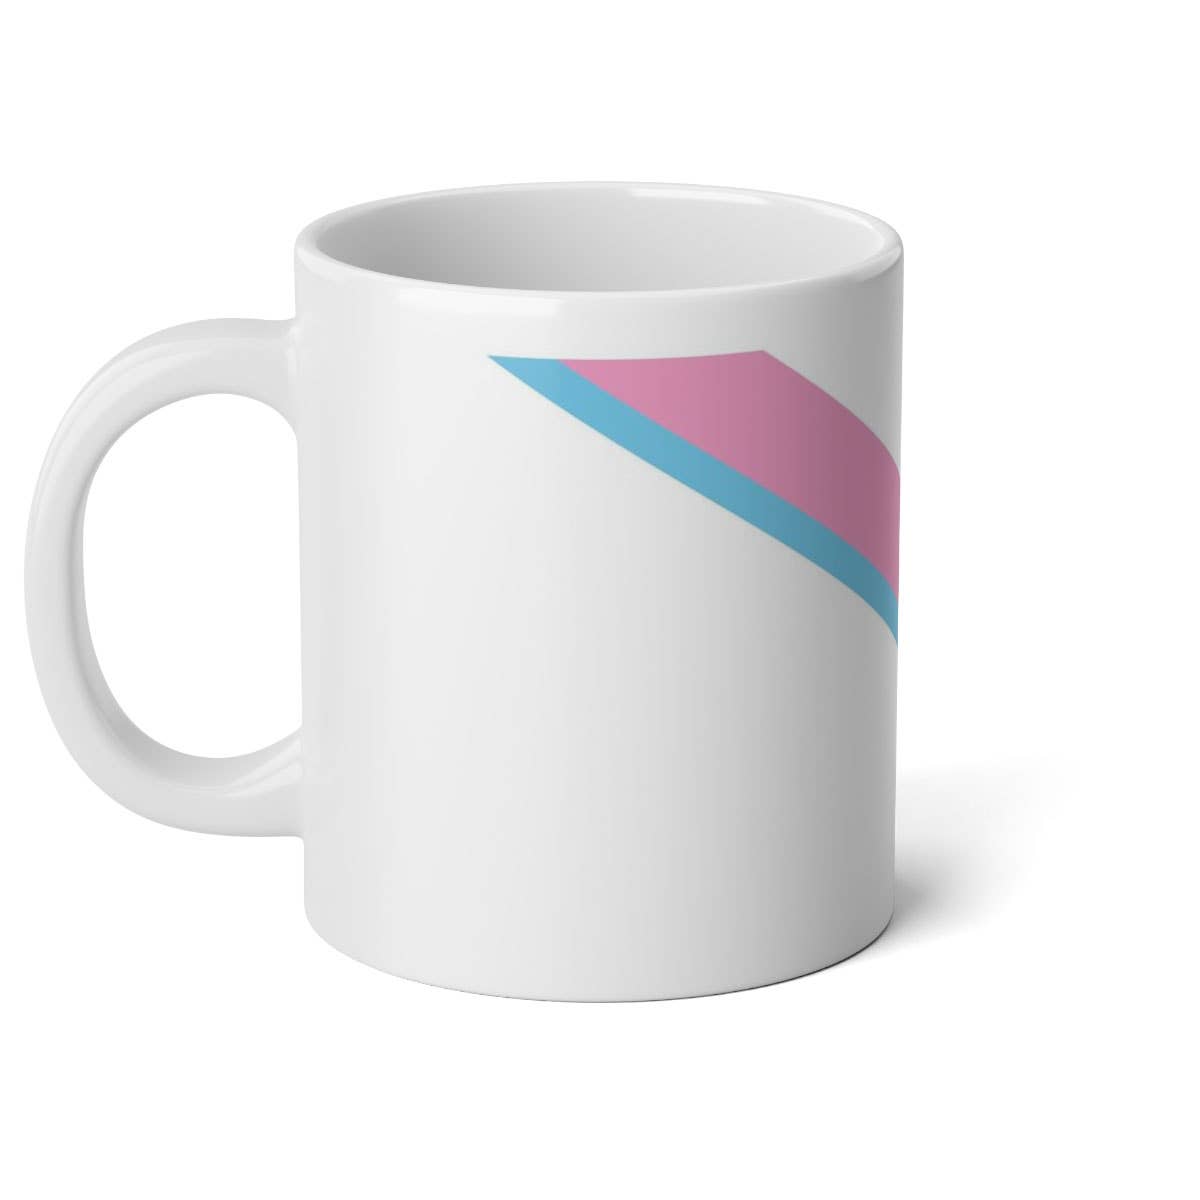 Trans Kids Belong - Support Transgender Youth ceramic mug